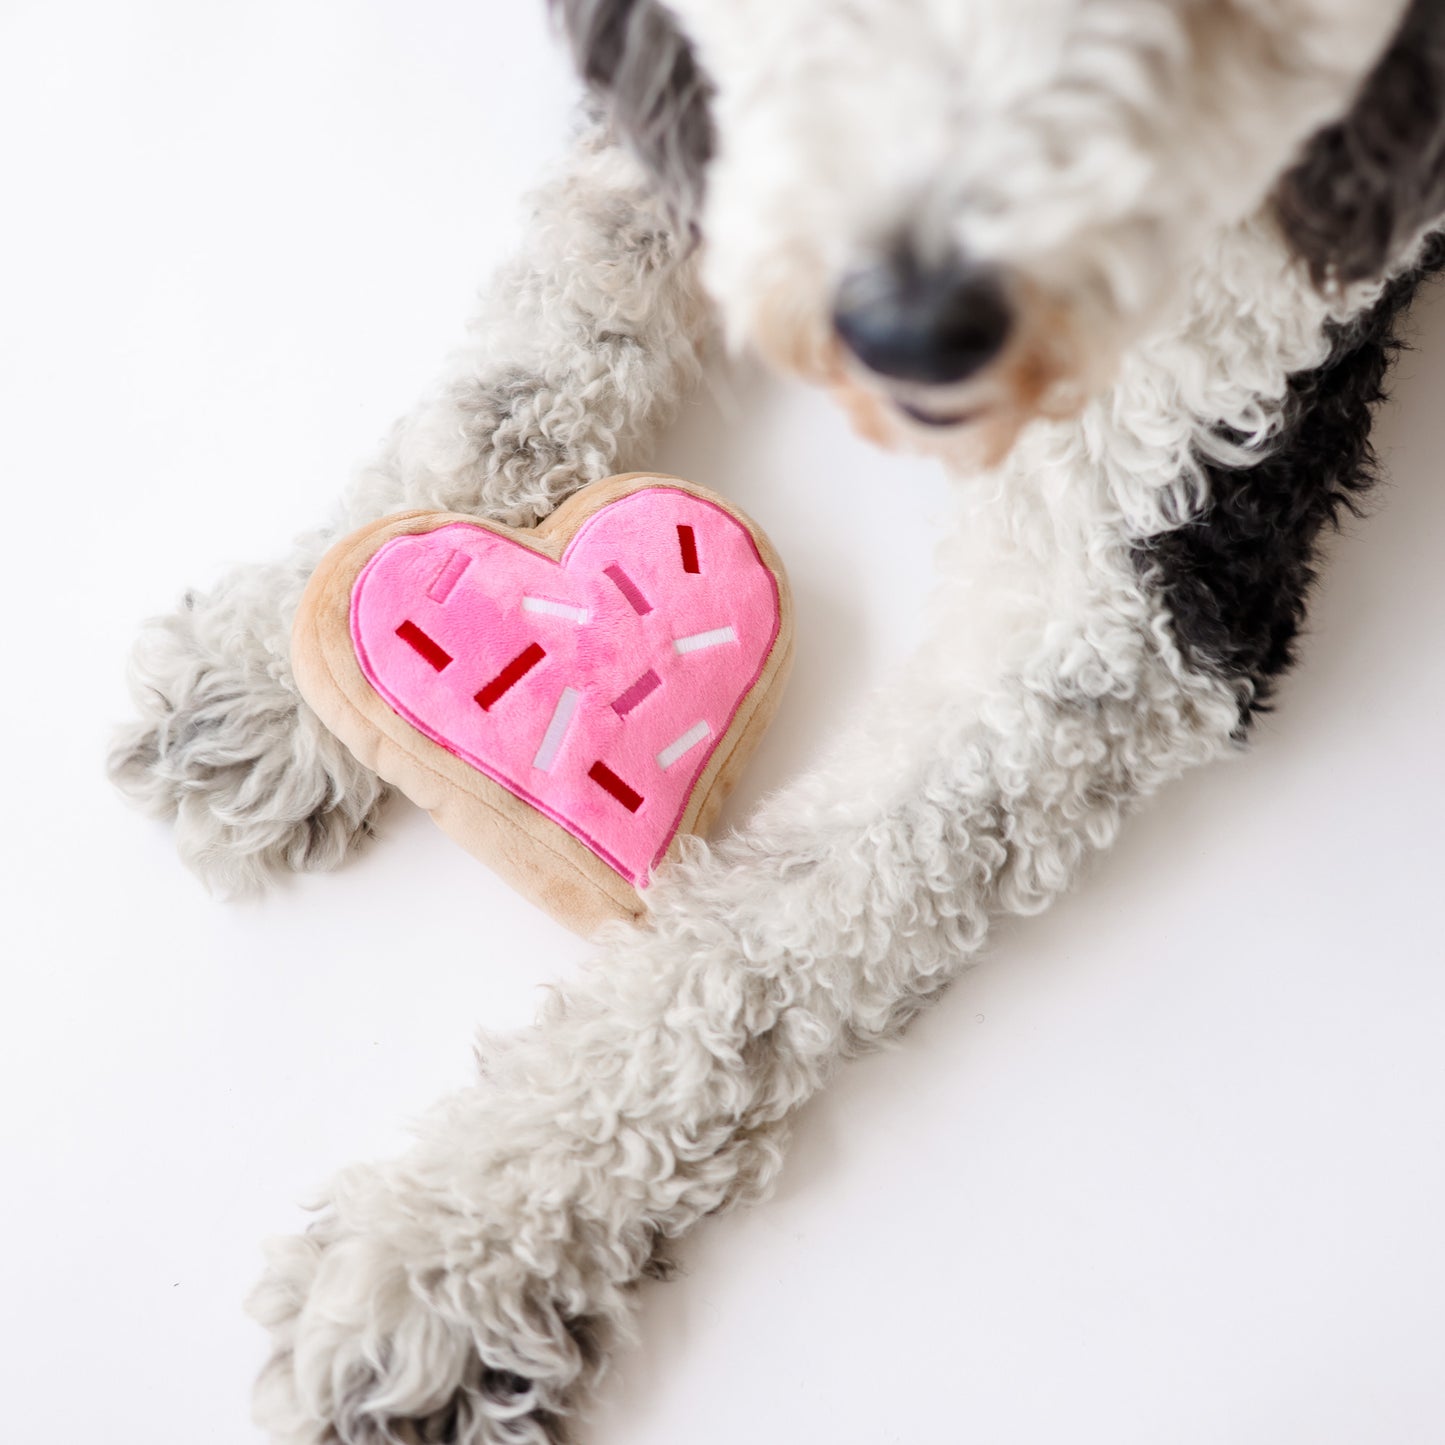 Midlee Pink Heart Sugar Cookie Dog Toy